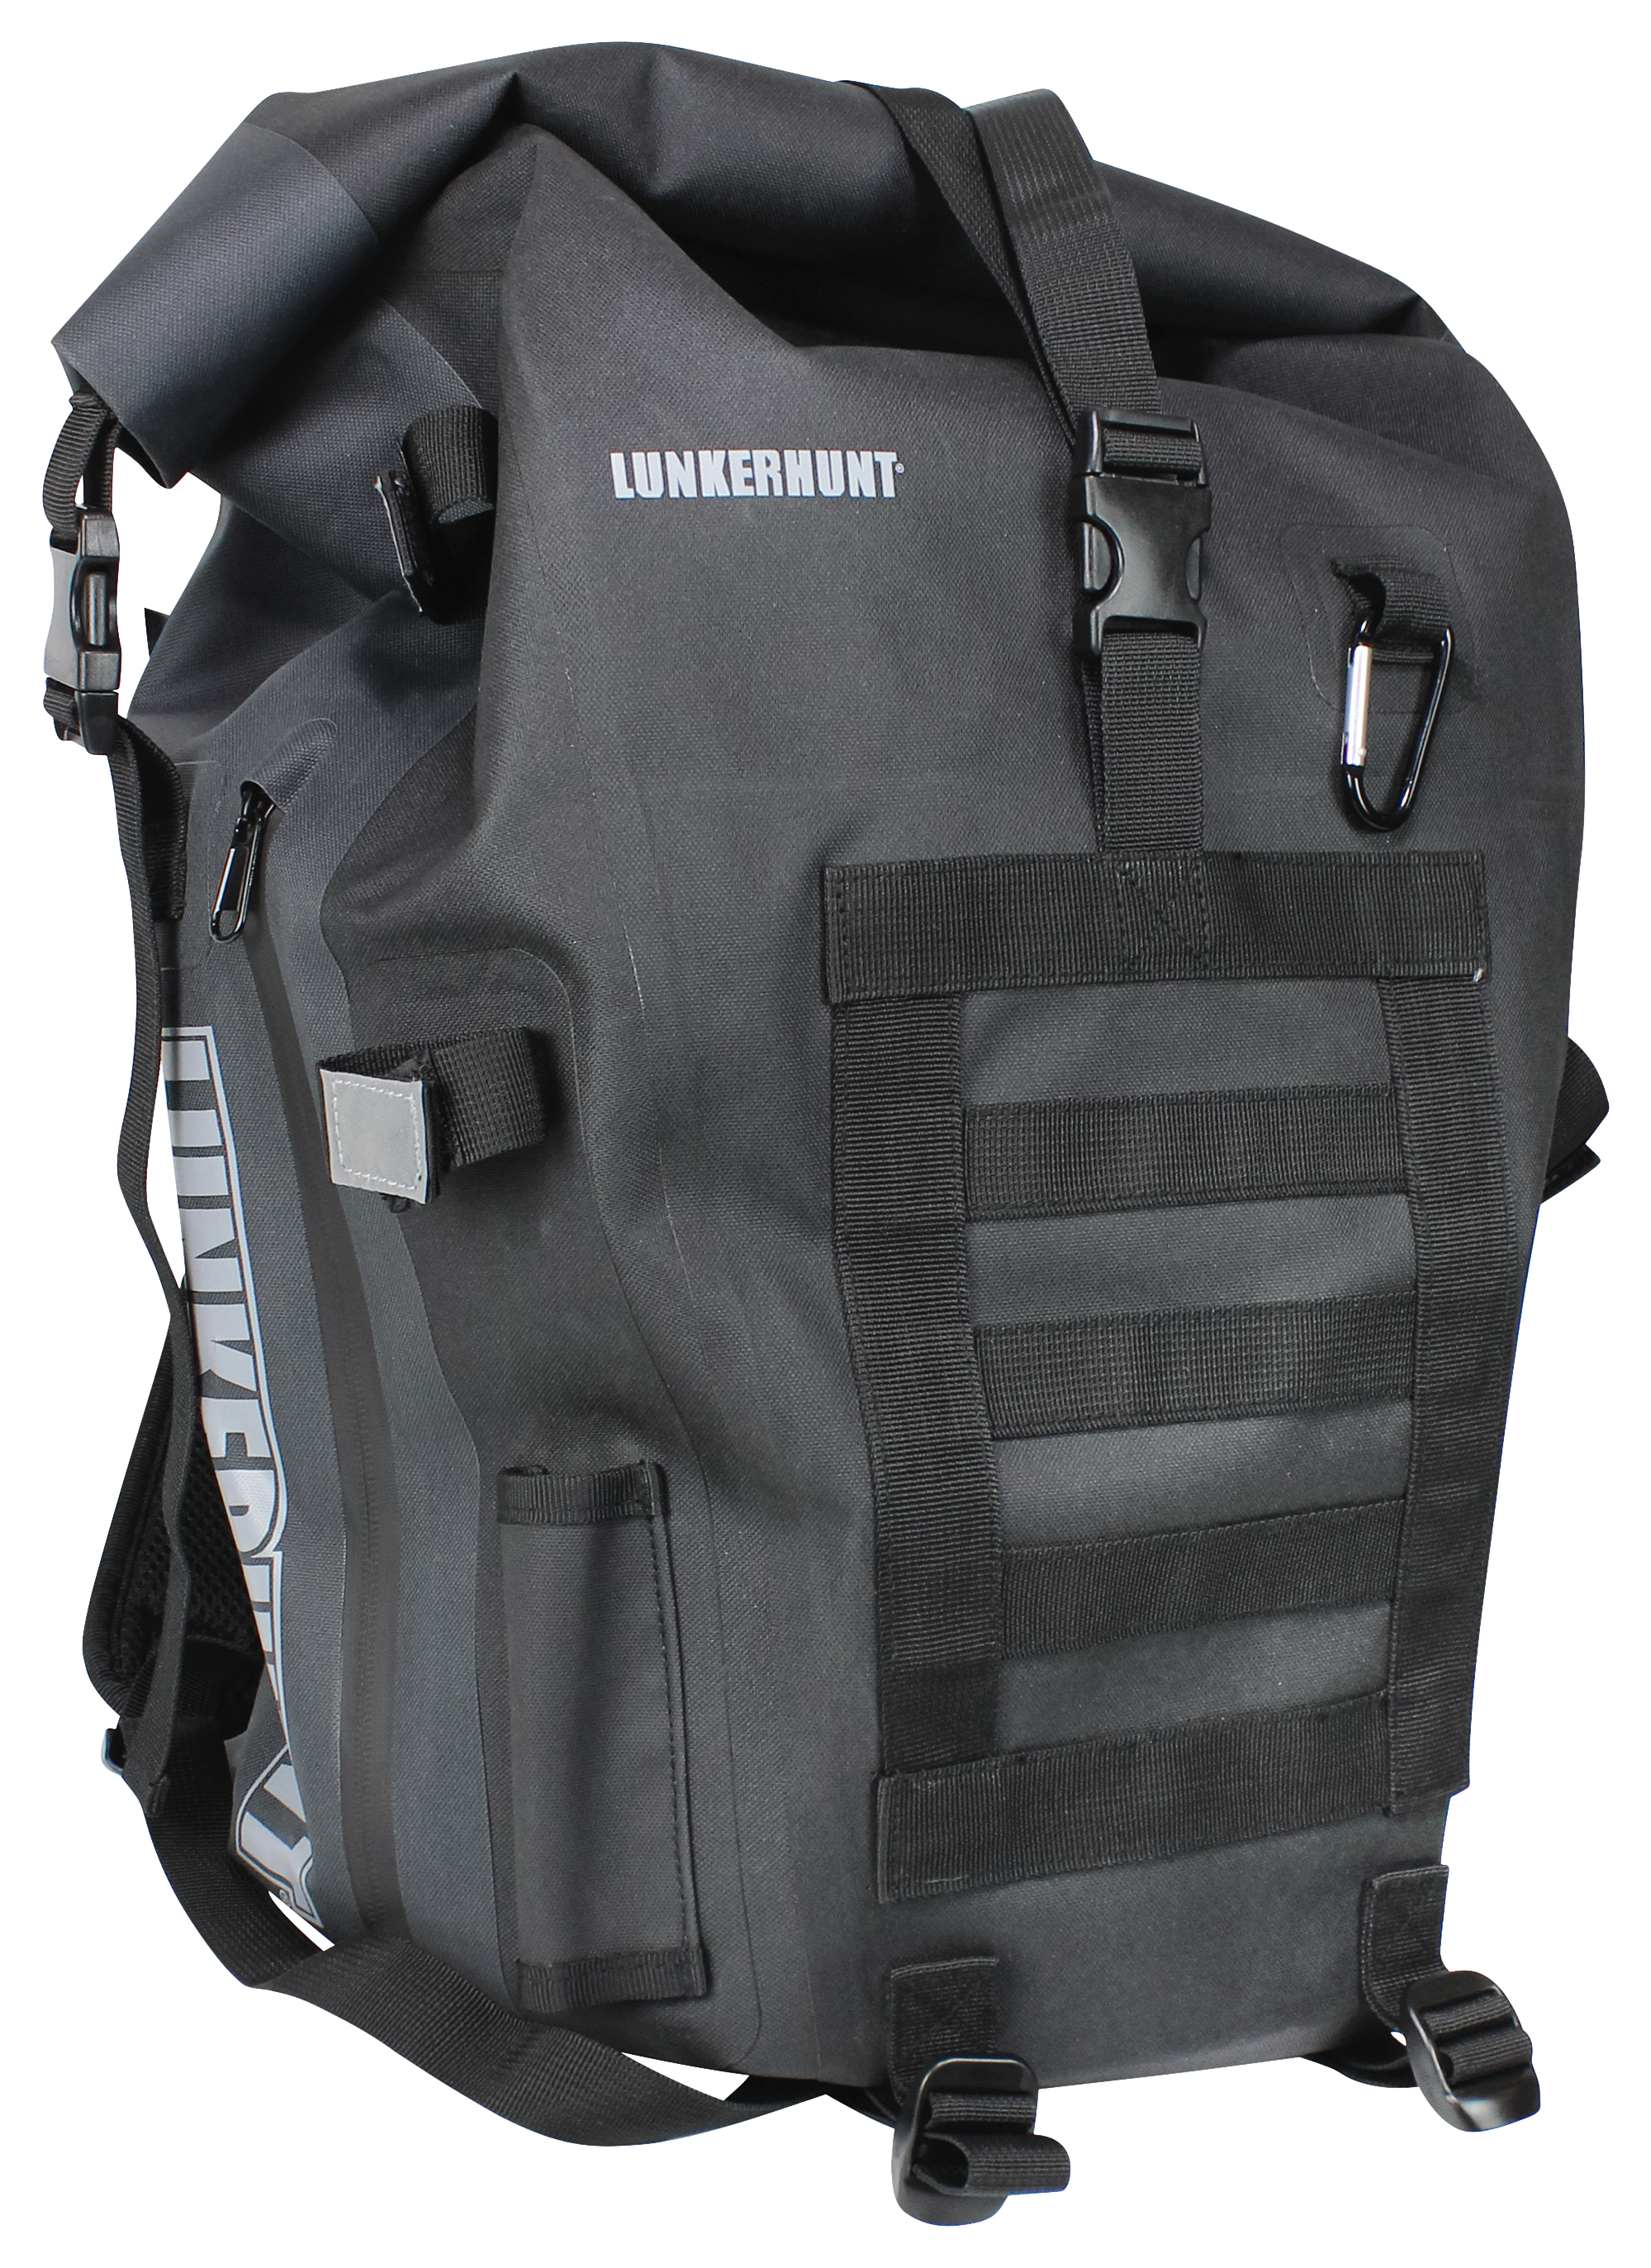 Lunkerhunt LTS Avid Backpack